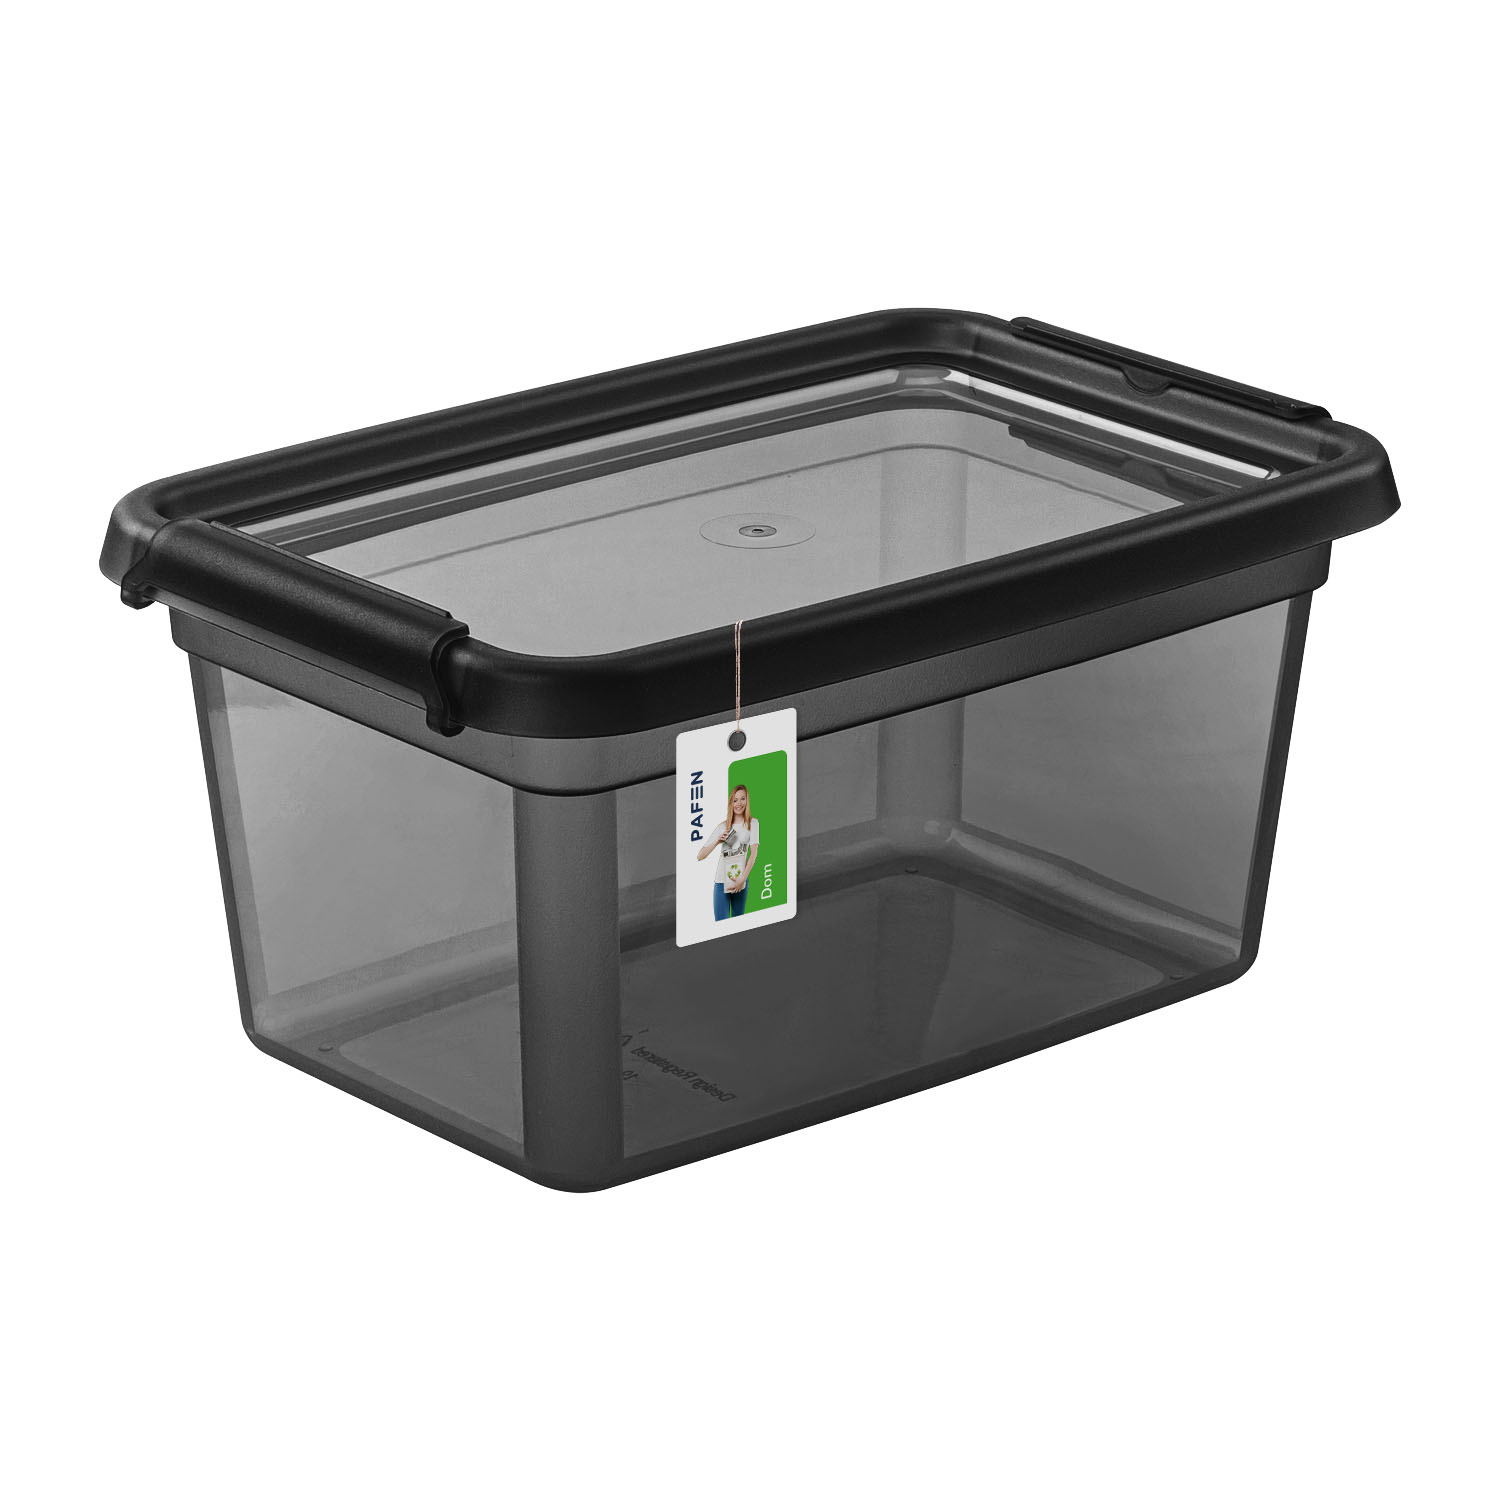 BaseStore Color 2322 Transparent black storage container